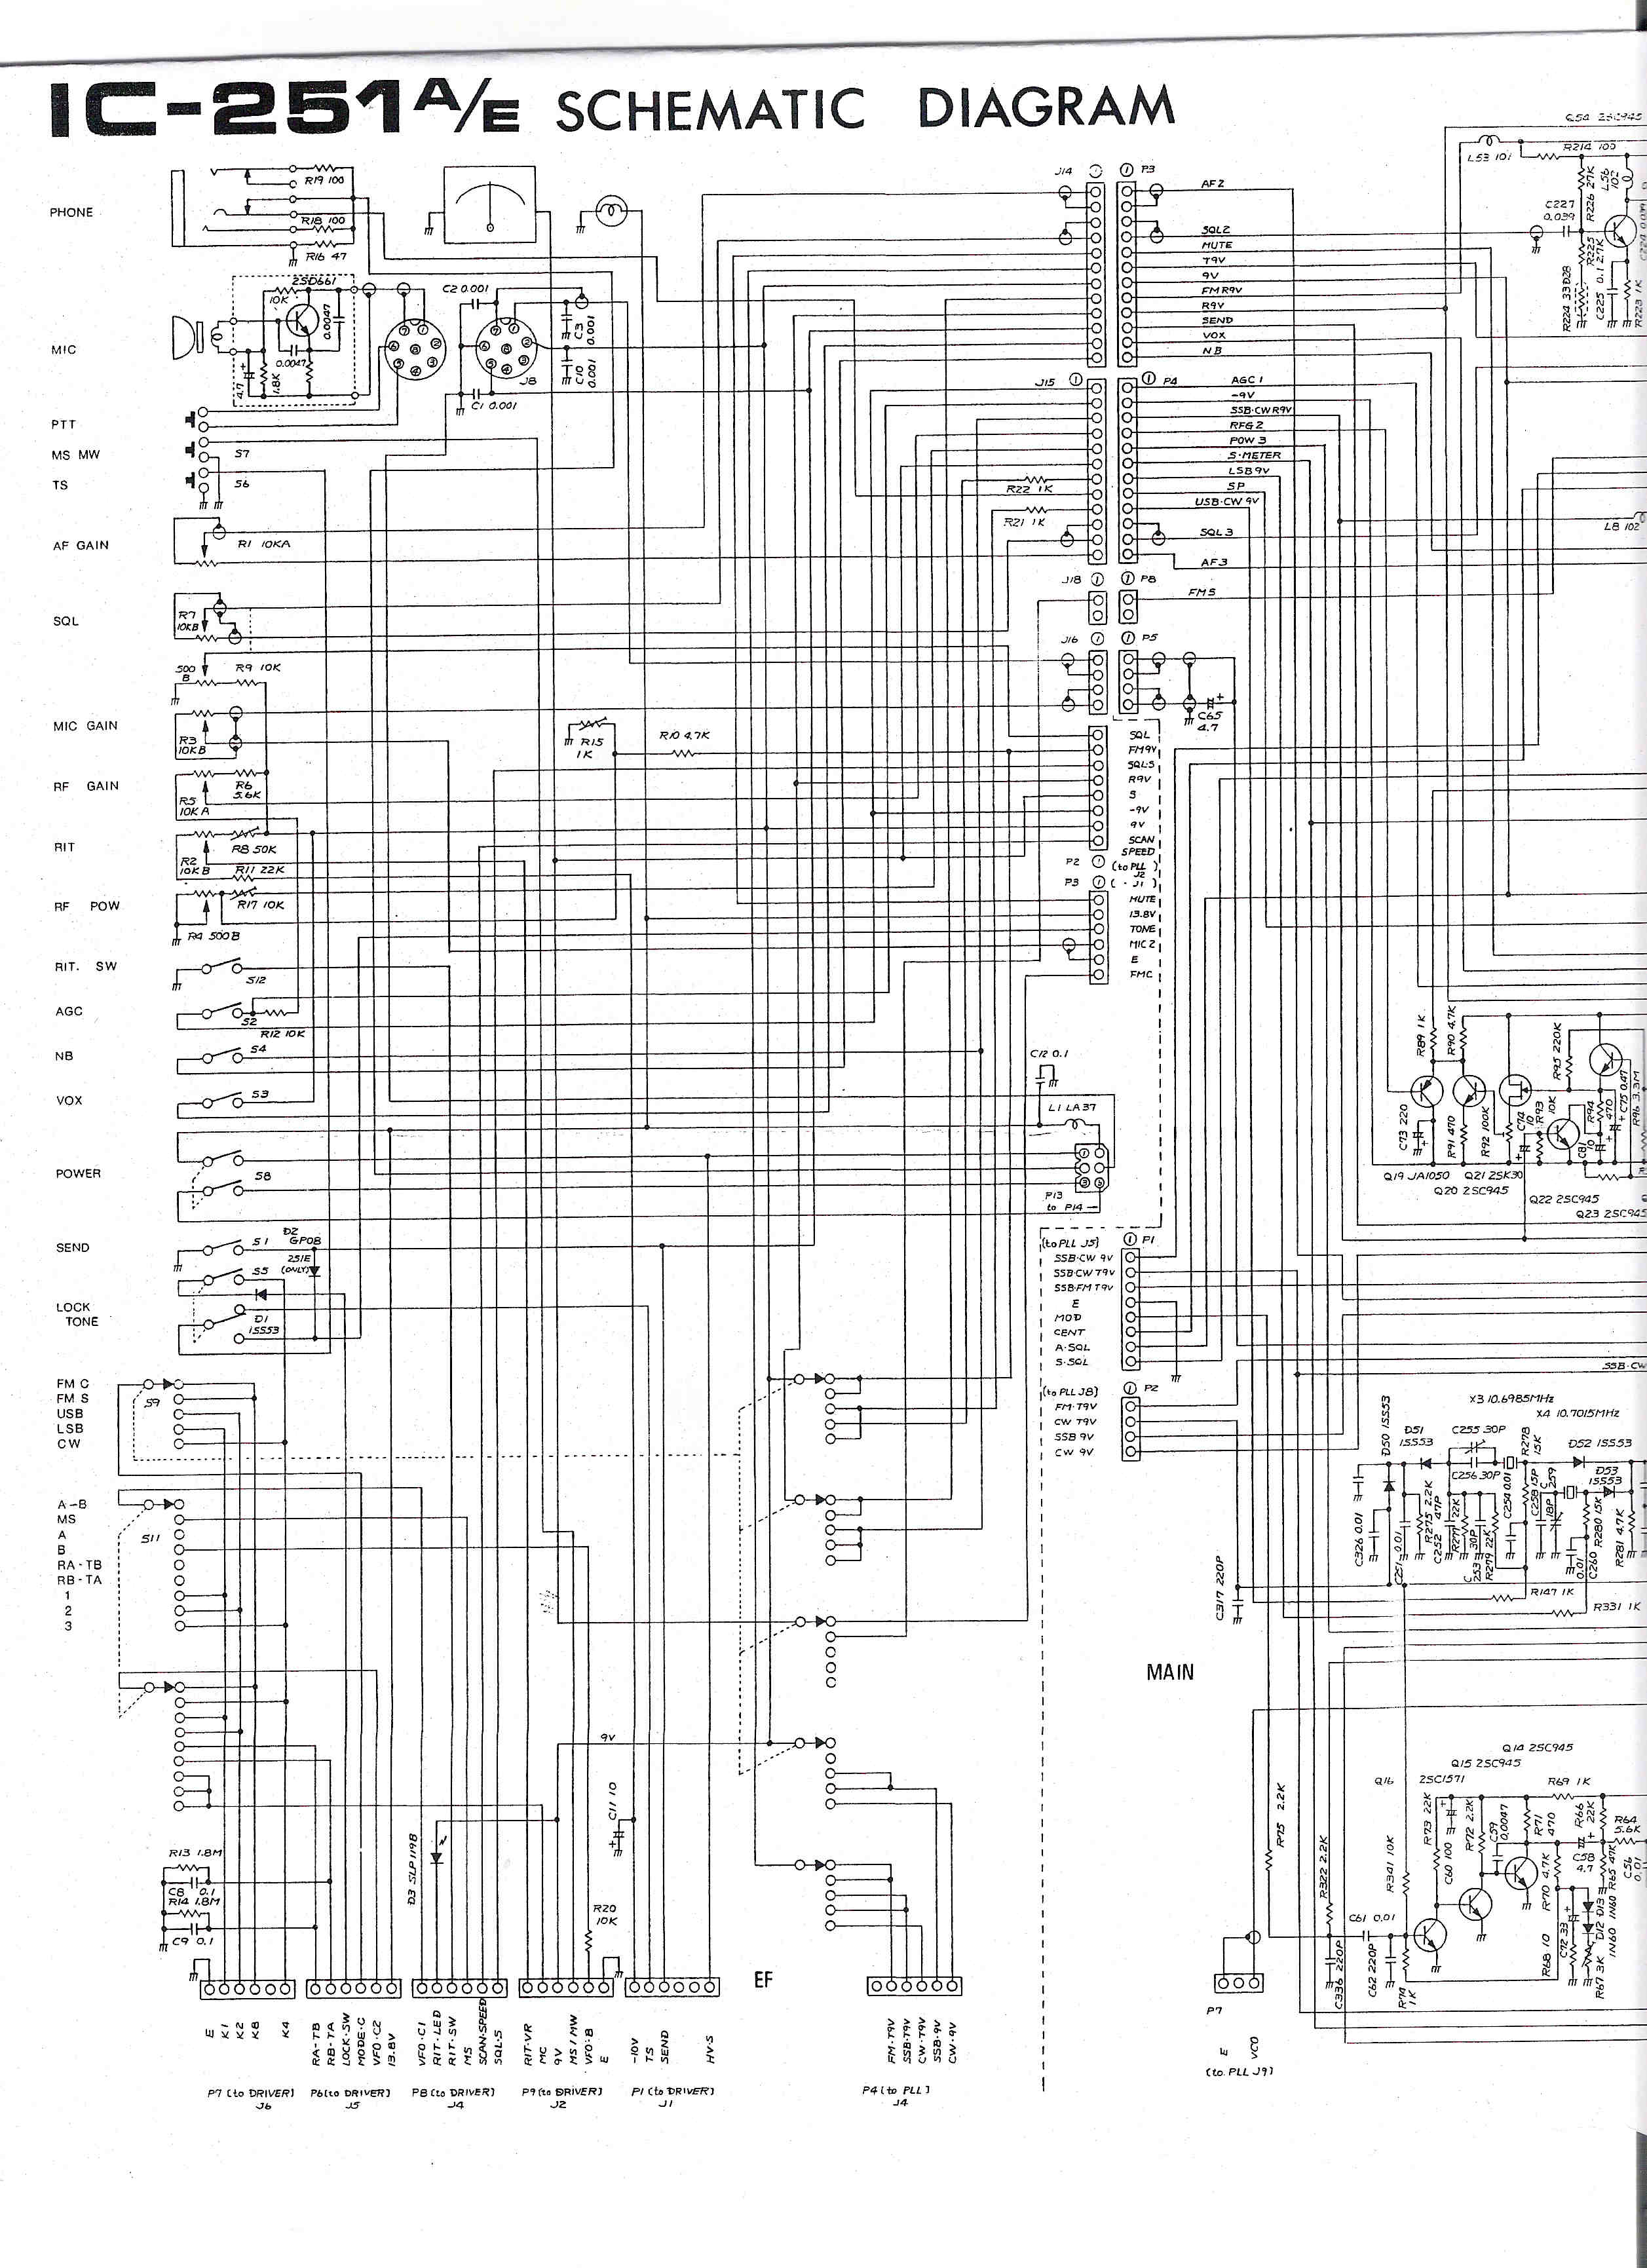 Icom IC-251 Schematic Diagram - Scan four